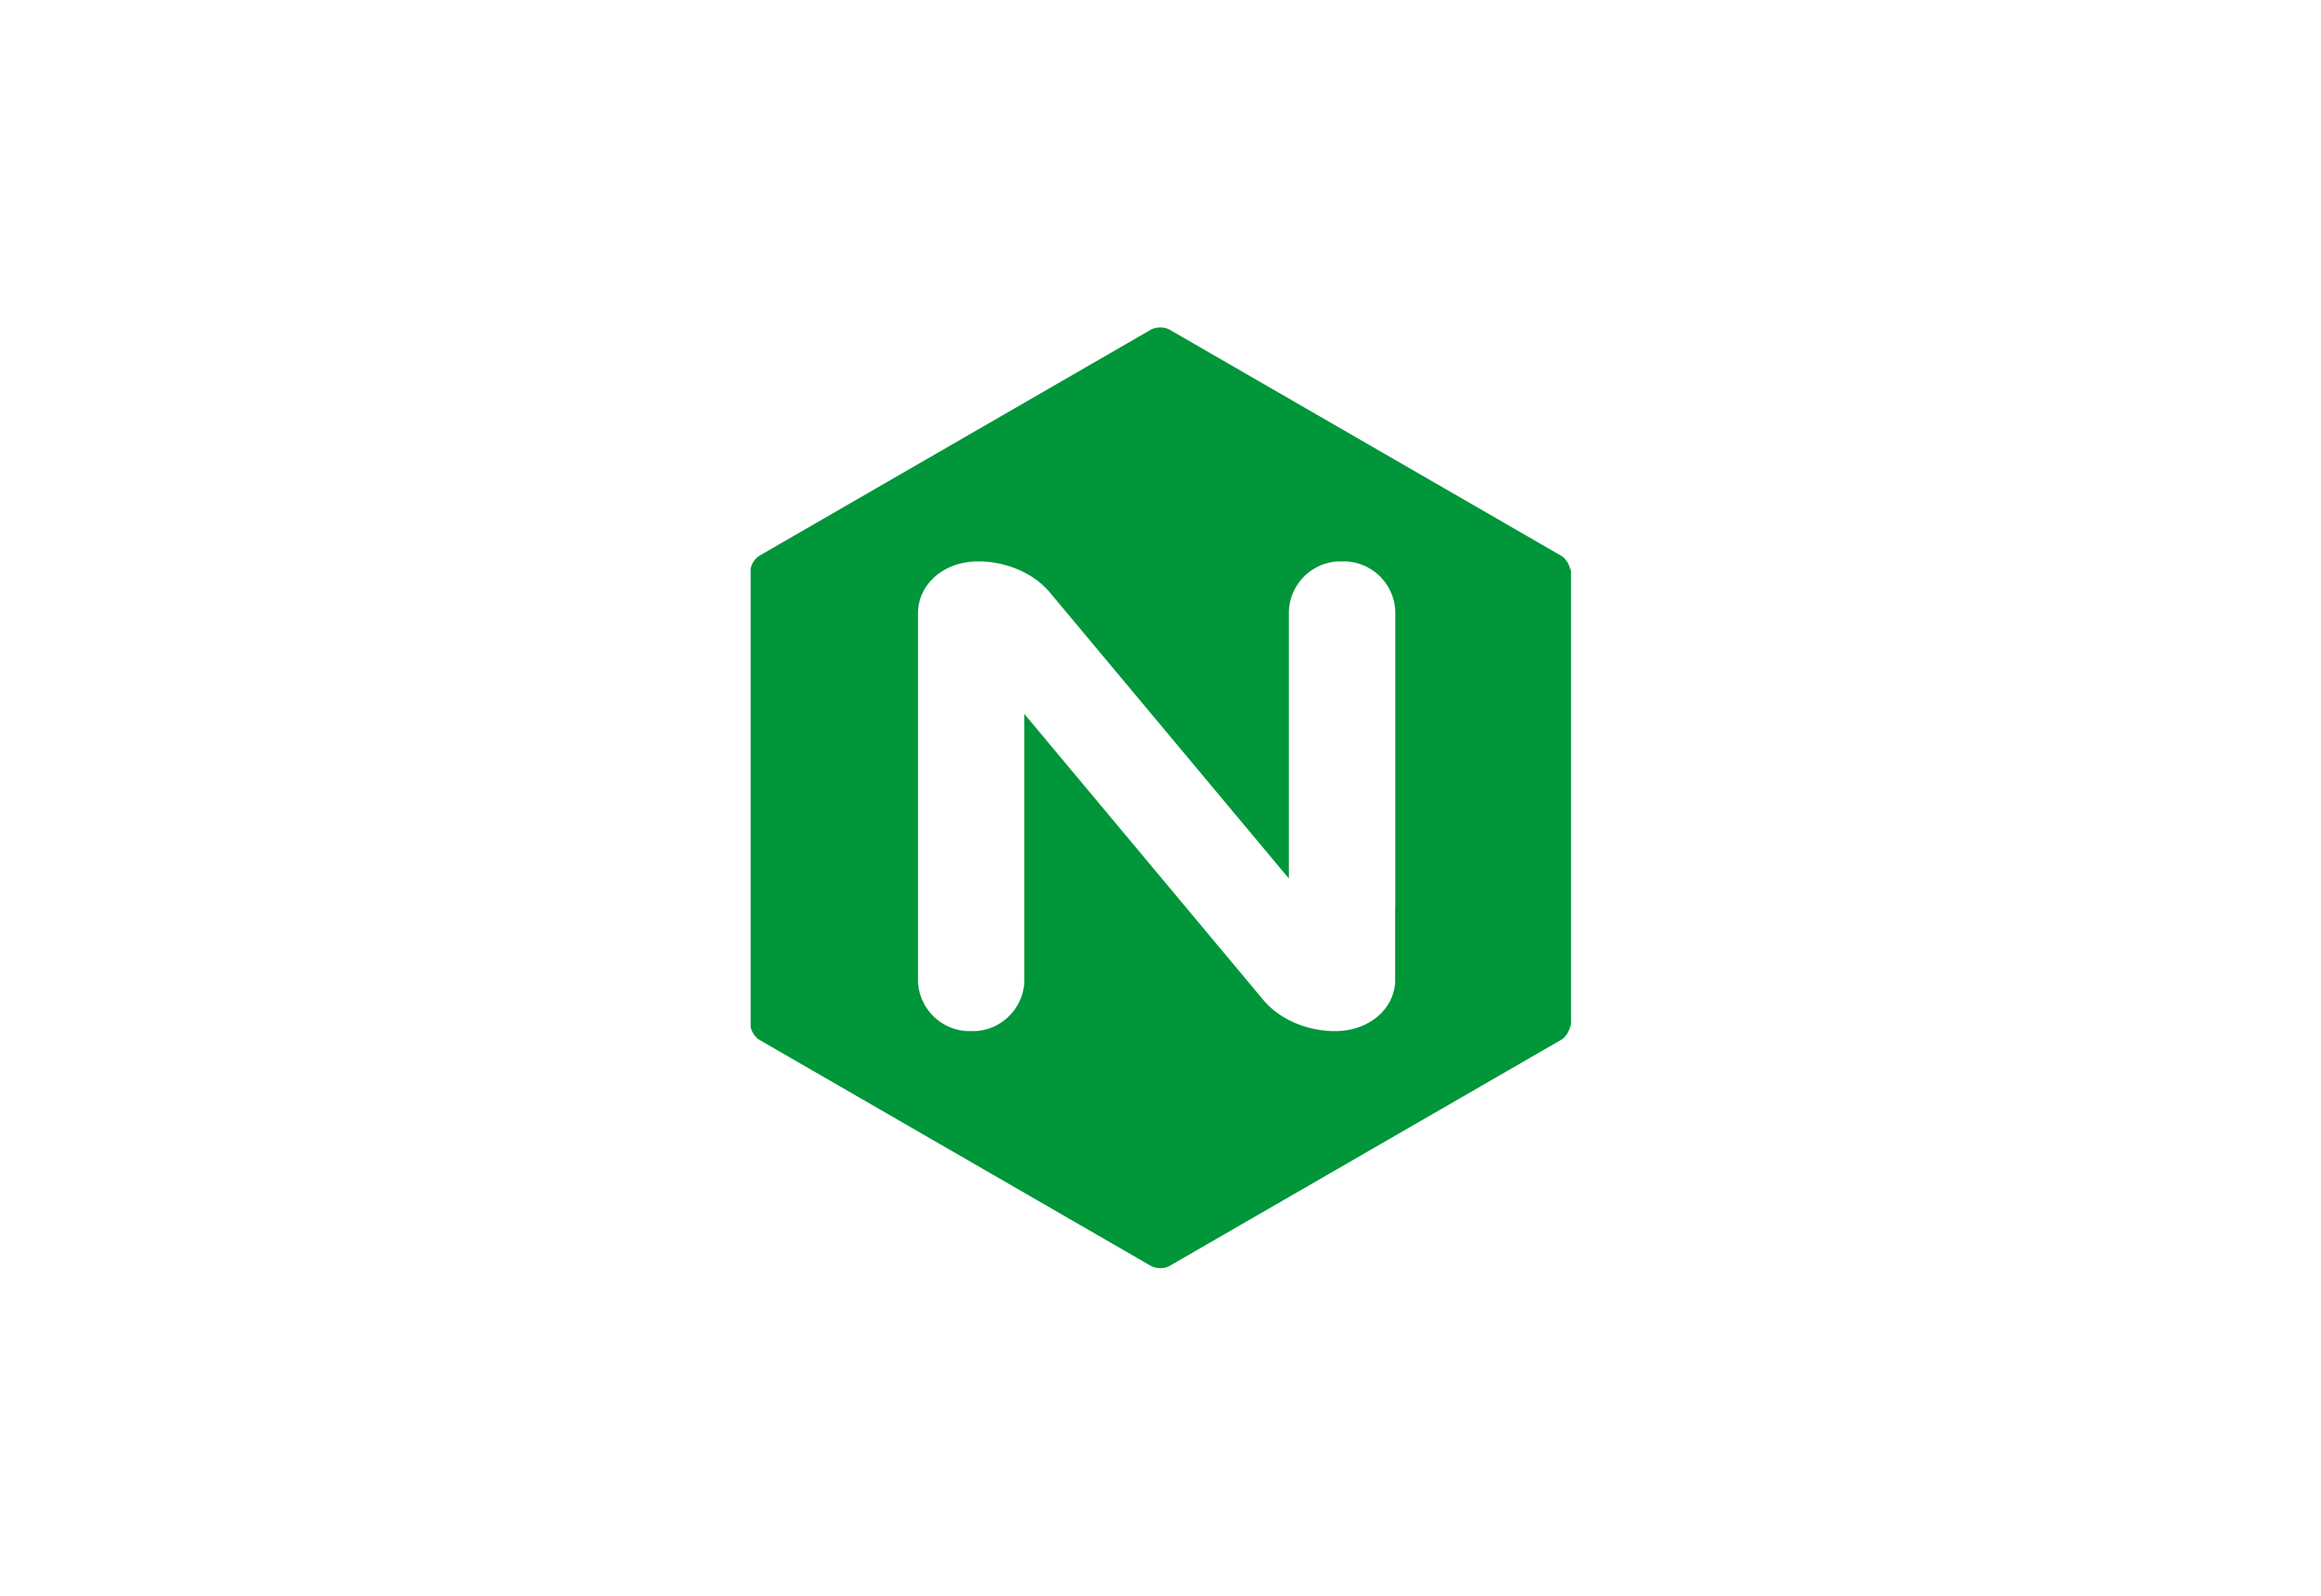 Nginx Logo - Nginx logo